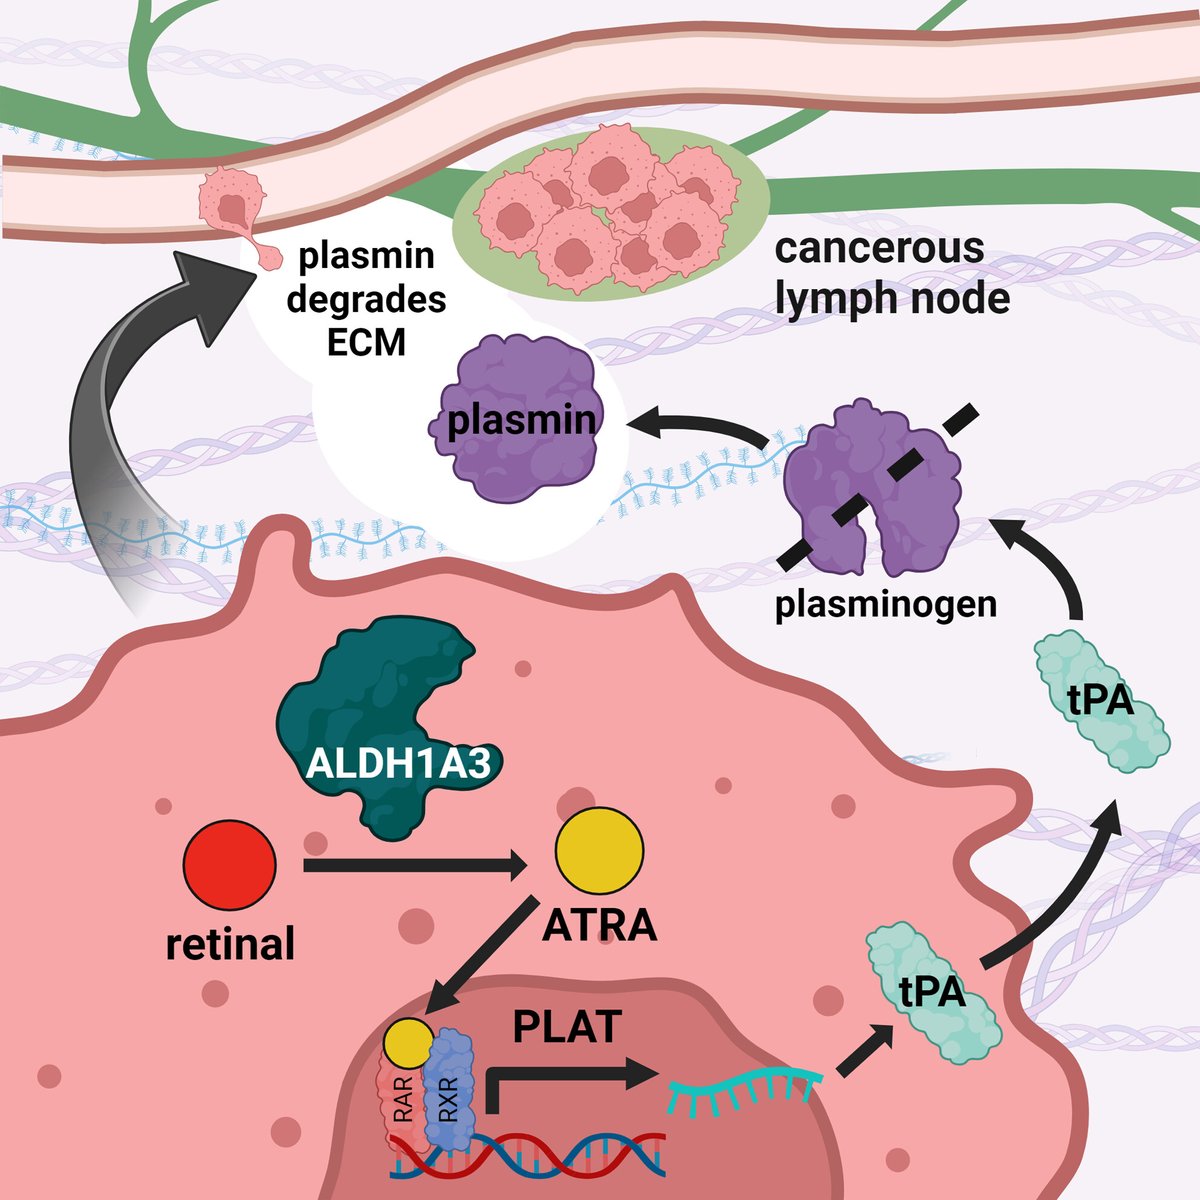 💫Have you seen this?

ALDH1A3 promotes invasion and metastasis in triple-negative breast cancer by regulating the plasminogen activation pathway

👉buff.ly/3S47unj

#TNBC #Plasminogen #BCSM 
#CancerMetastasis #Plasmin
#CancerMetabolism